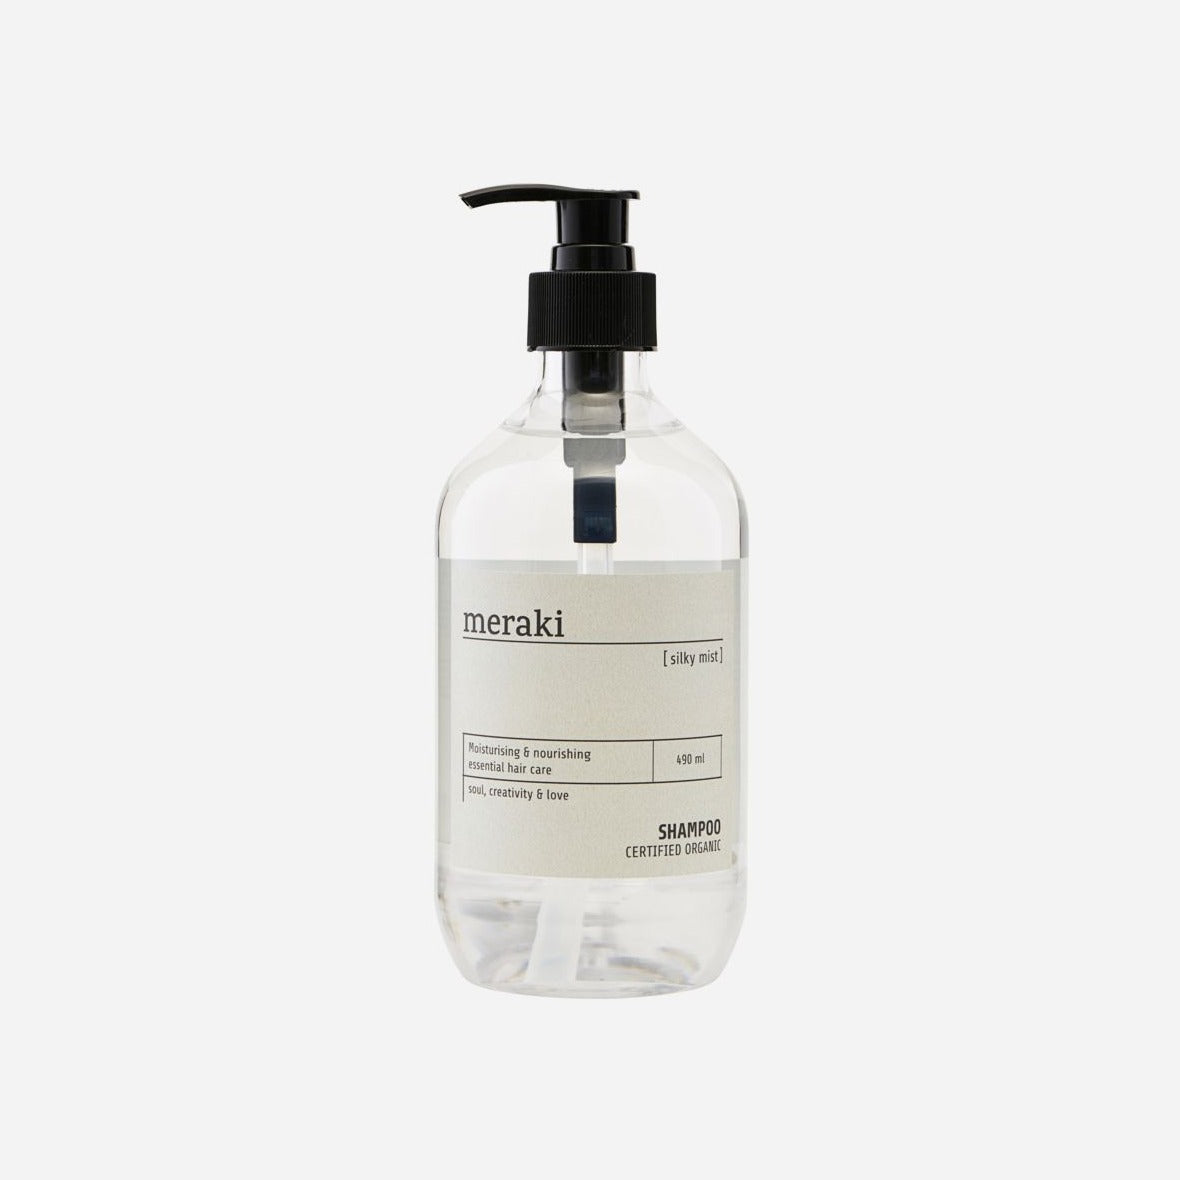 shampoo in a clear glass bottle